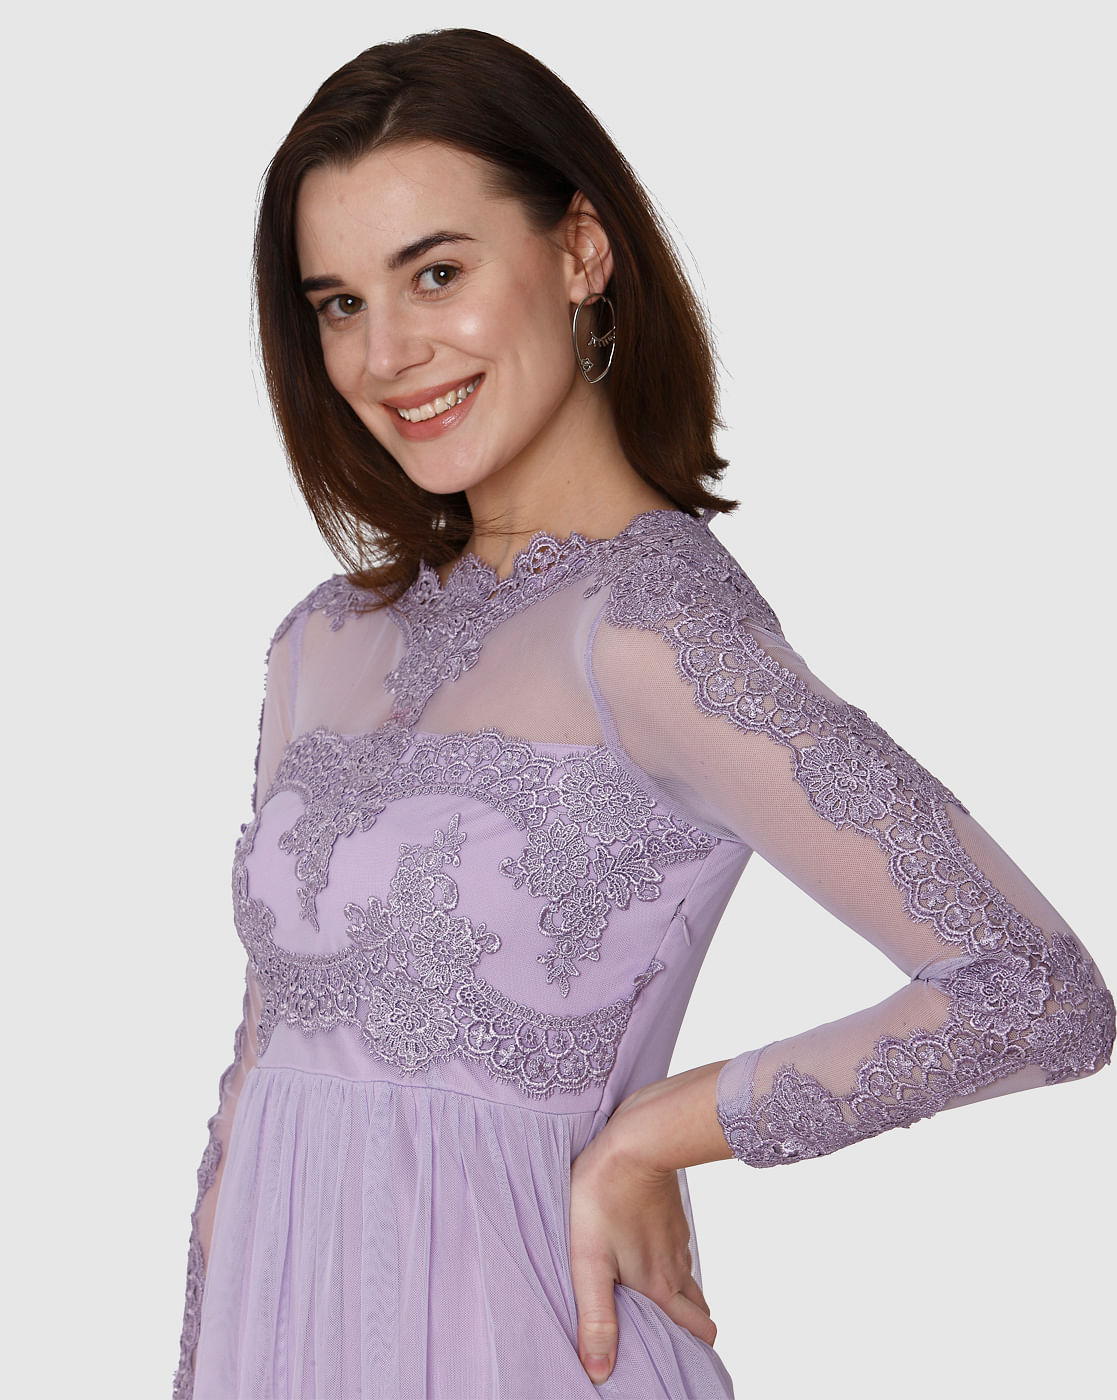 vero moda purple dress